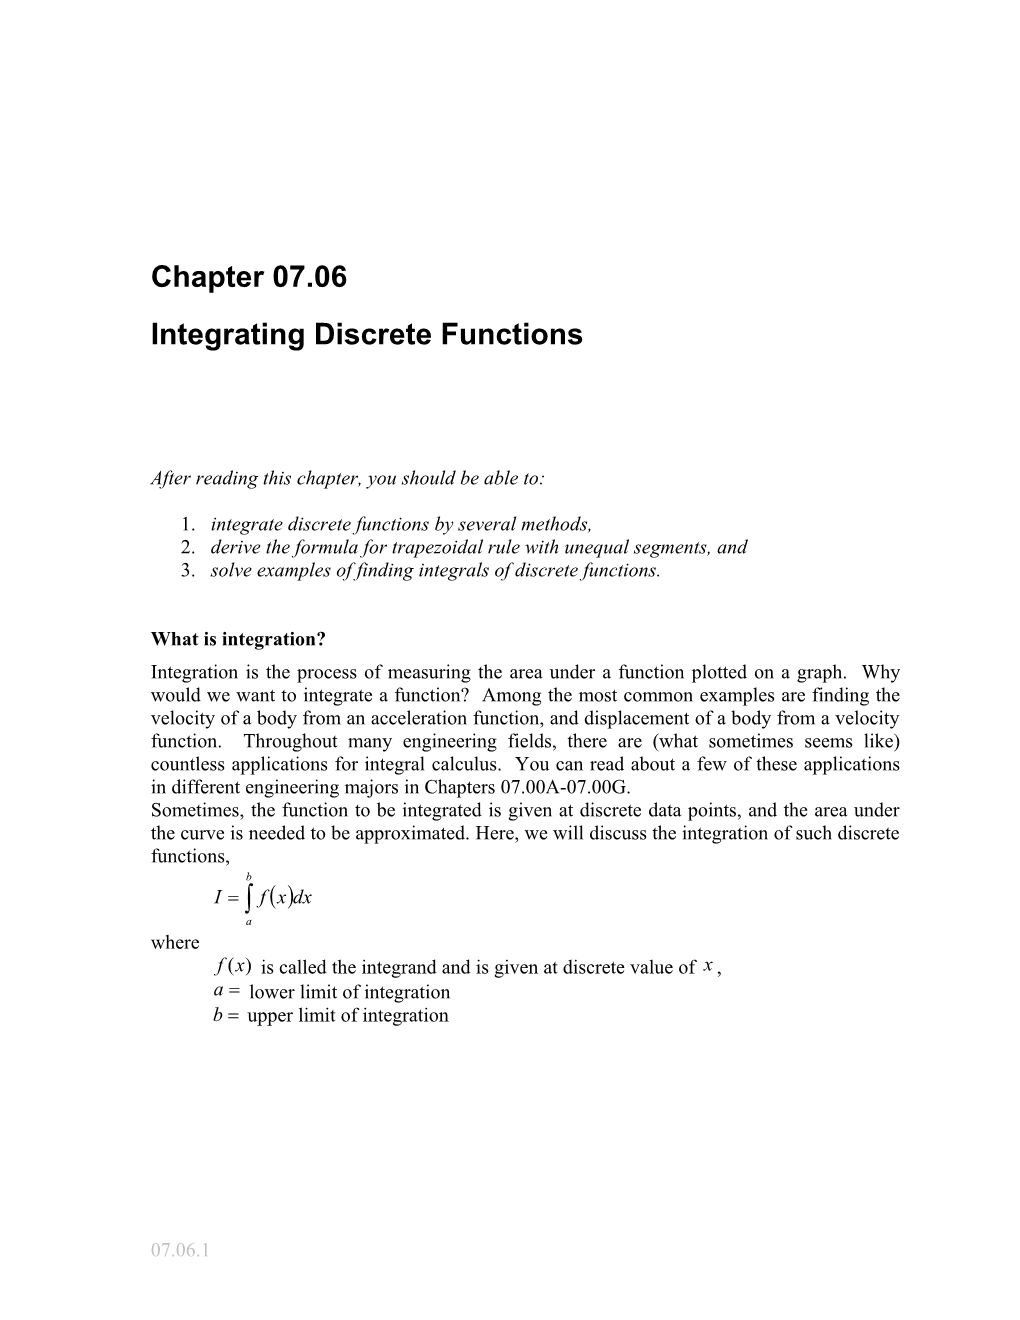 Integration of Discrete Function